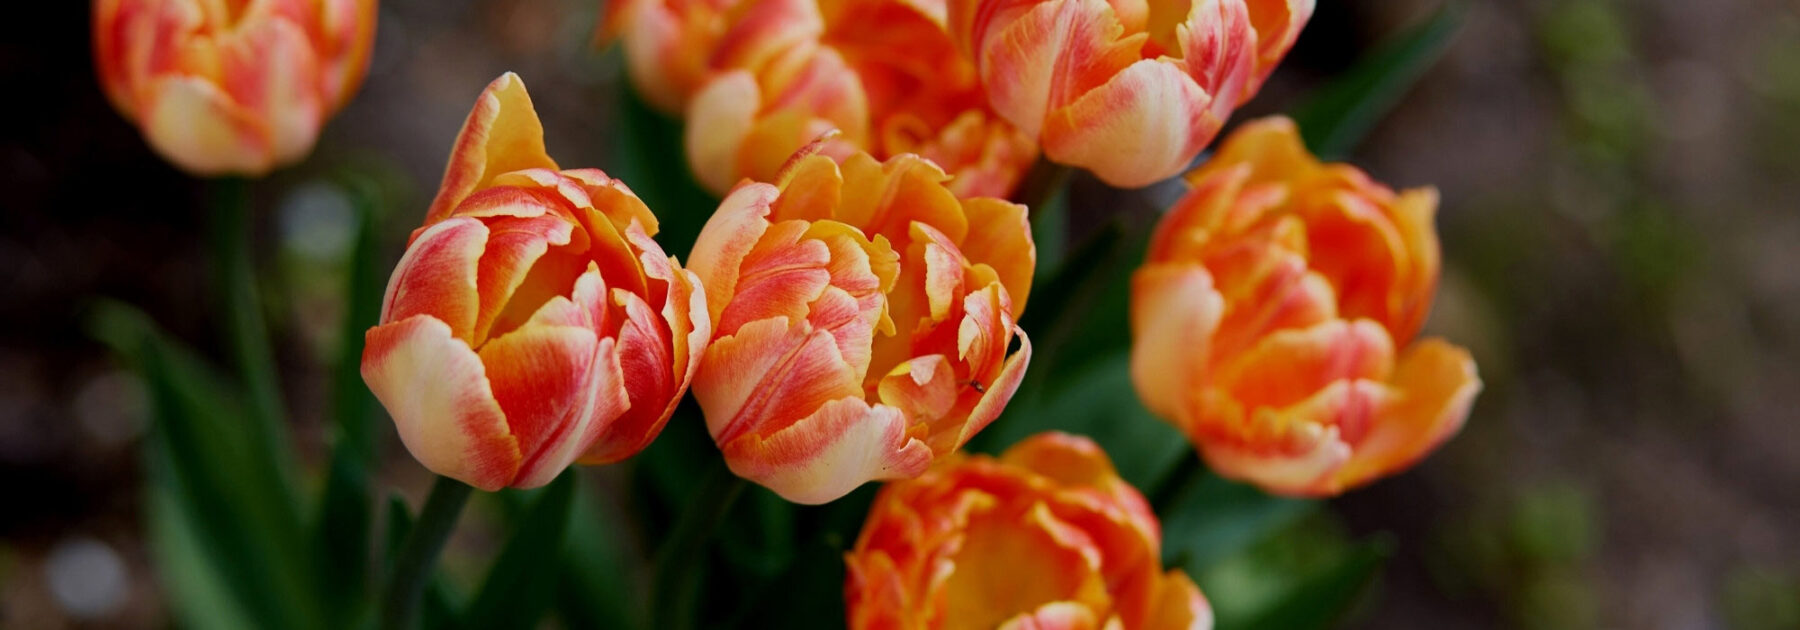 Tulipes : que faire quand elles ont fini de fleurir ?